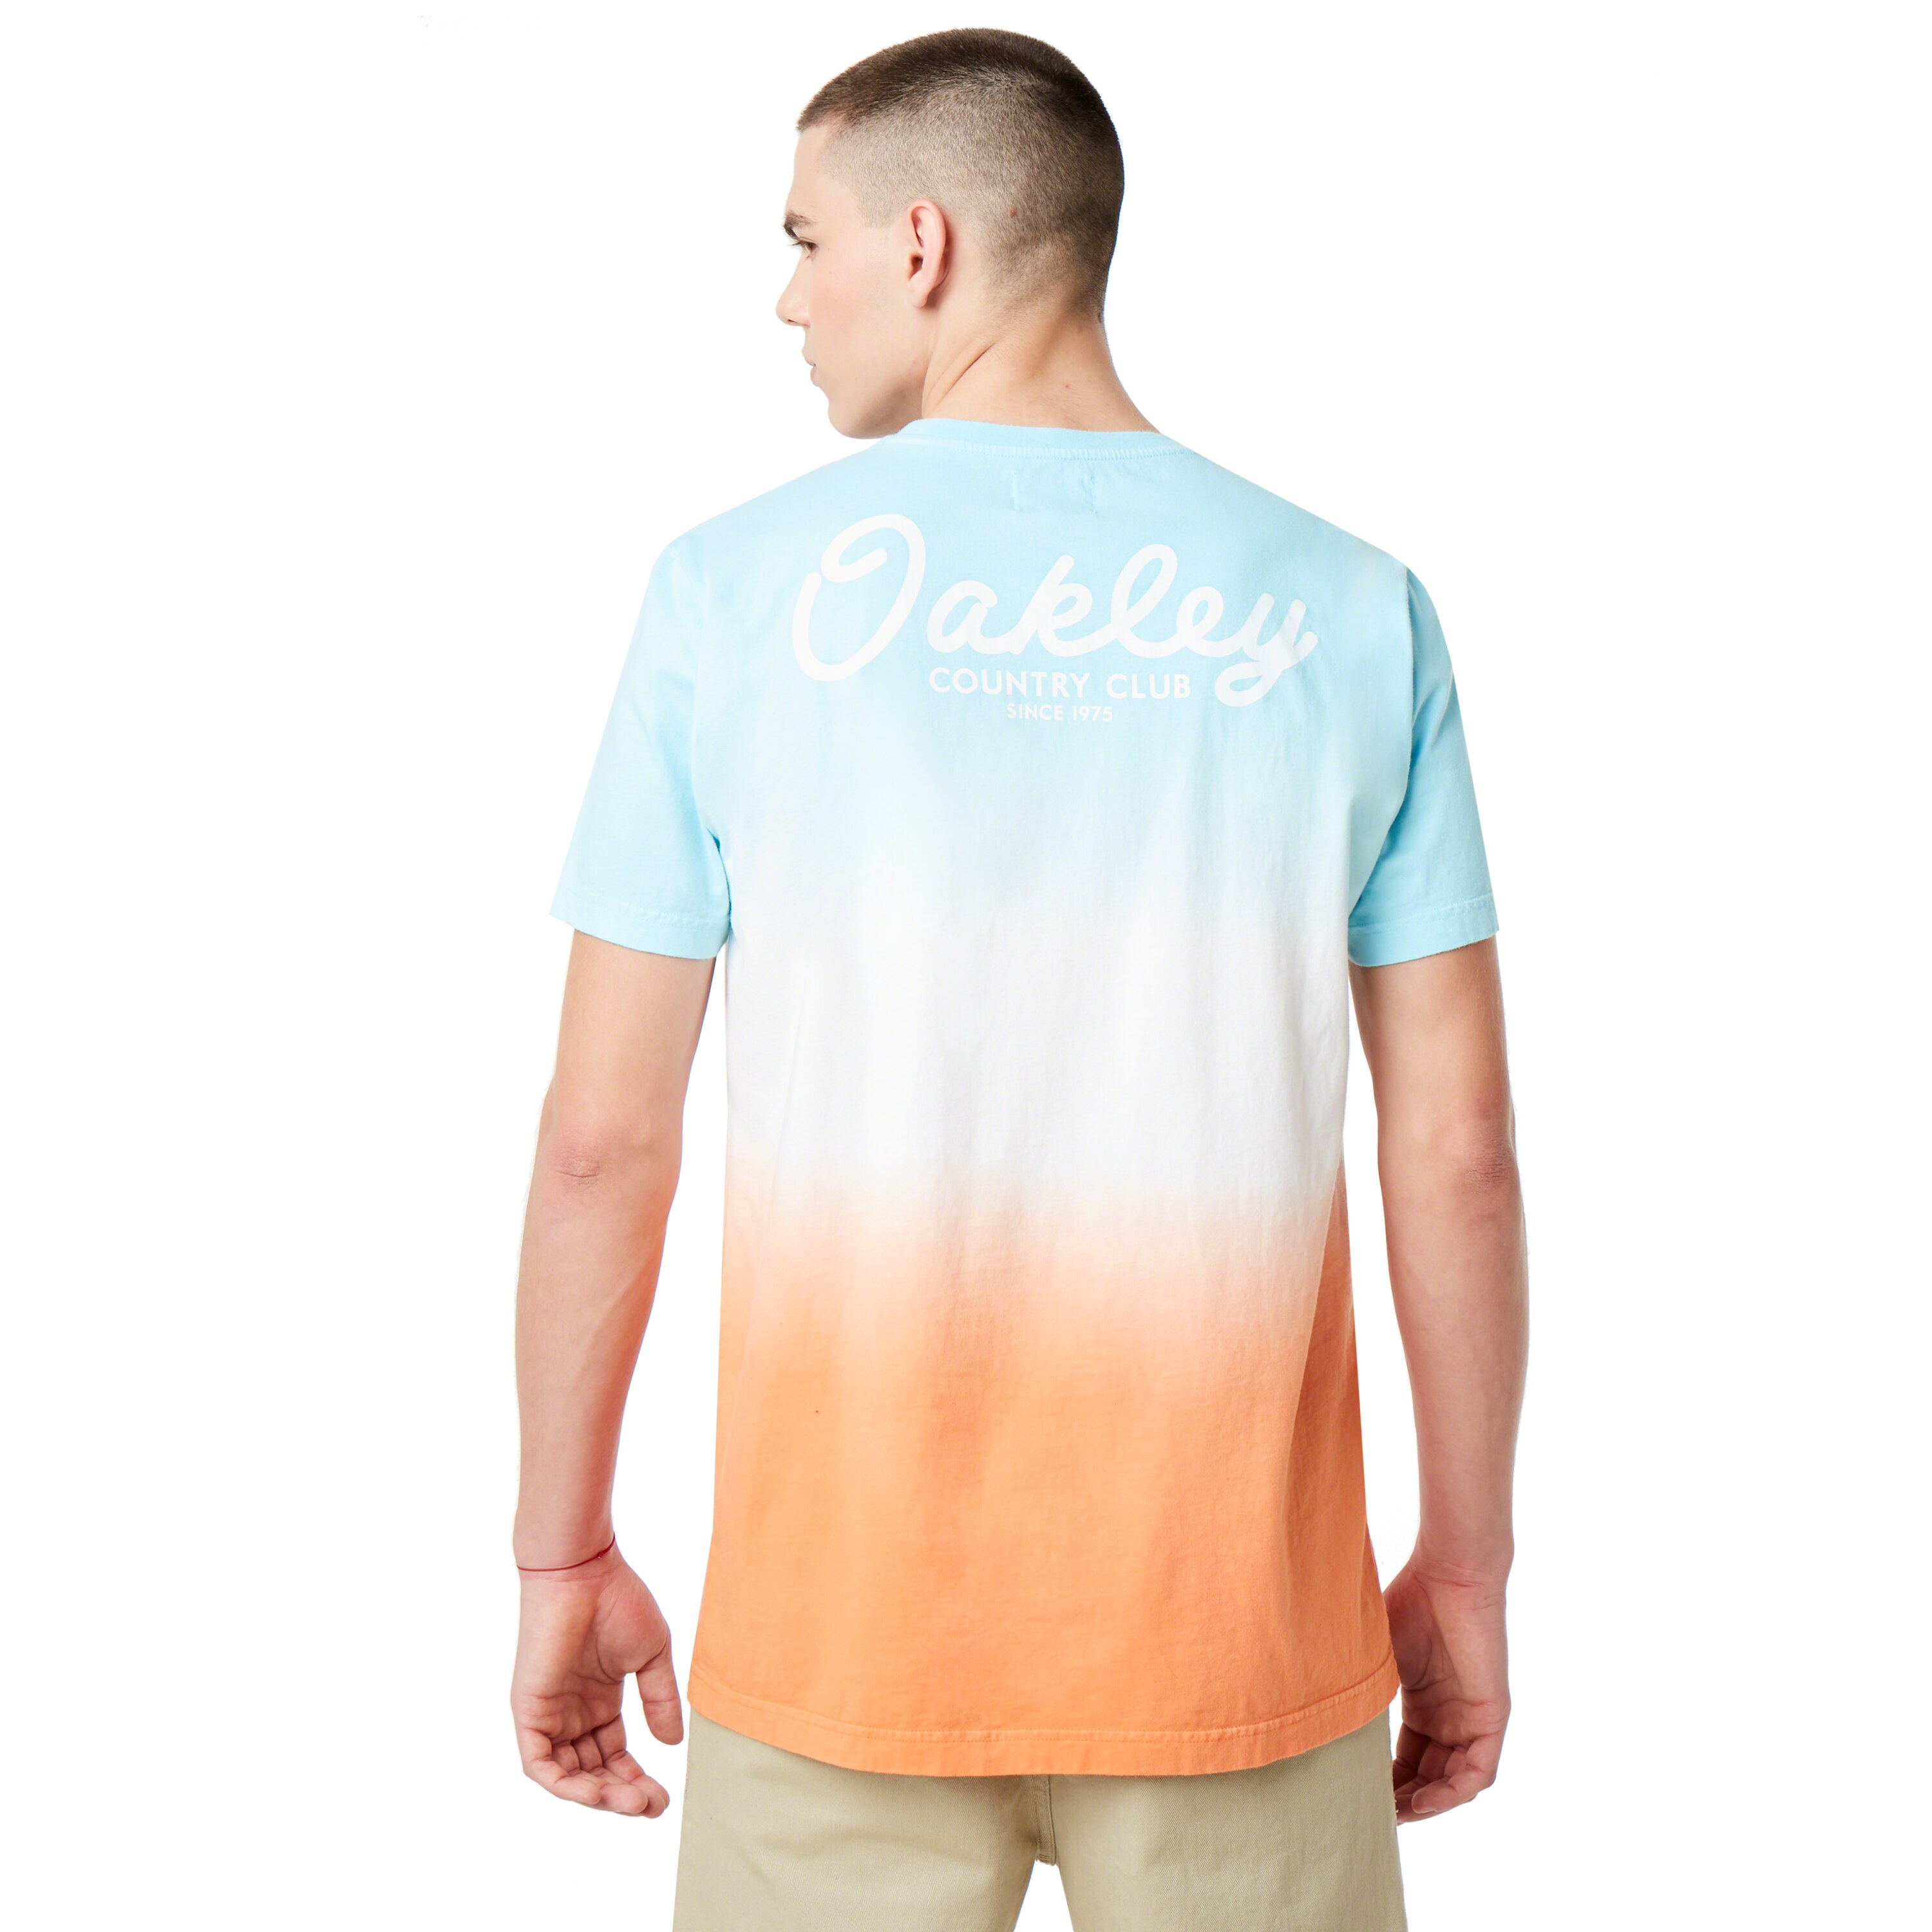 oakley fishing shirts